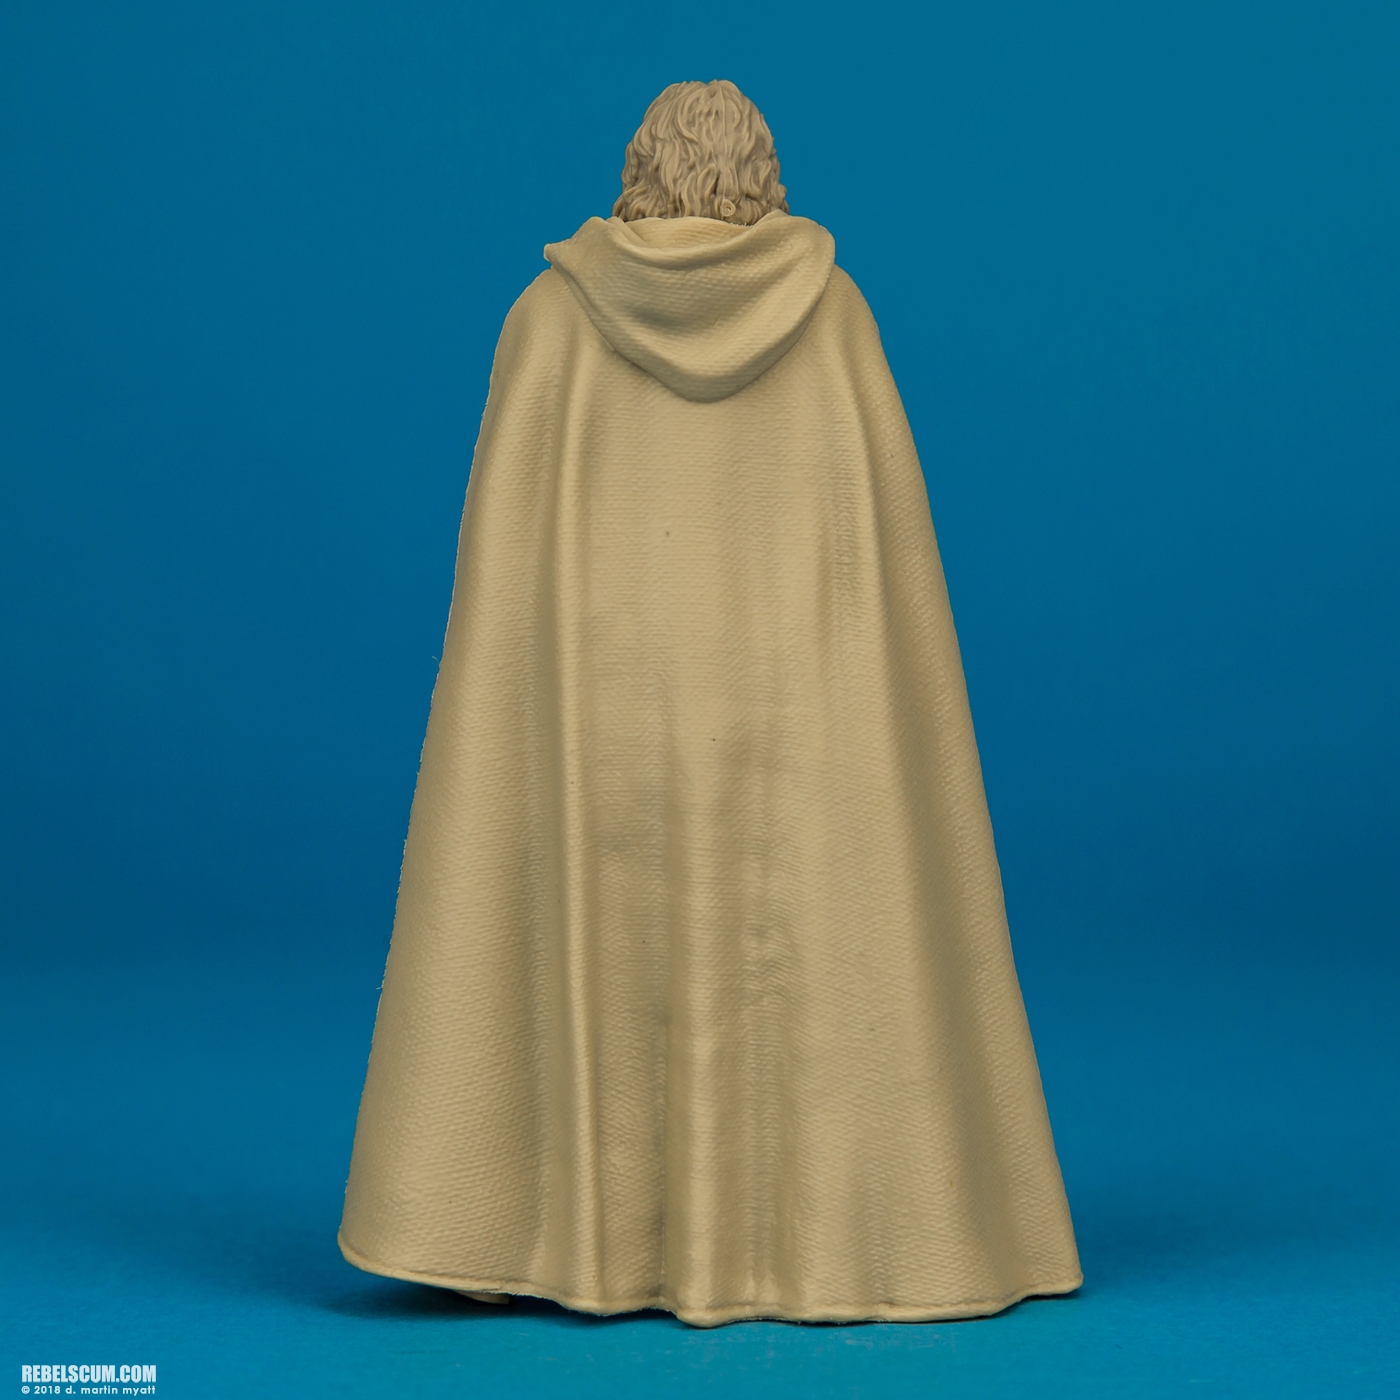 Luke-Skywalker-Jedi-Master-Star-Wars-Universe-ForceLink-2-008.jpg